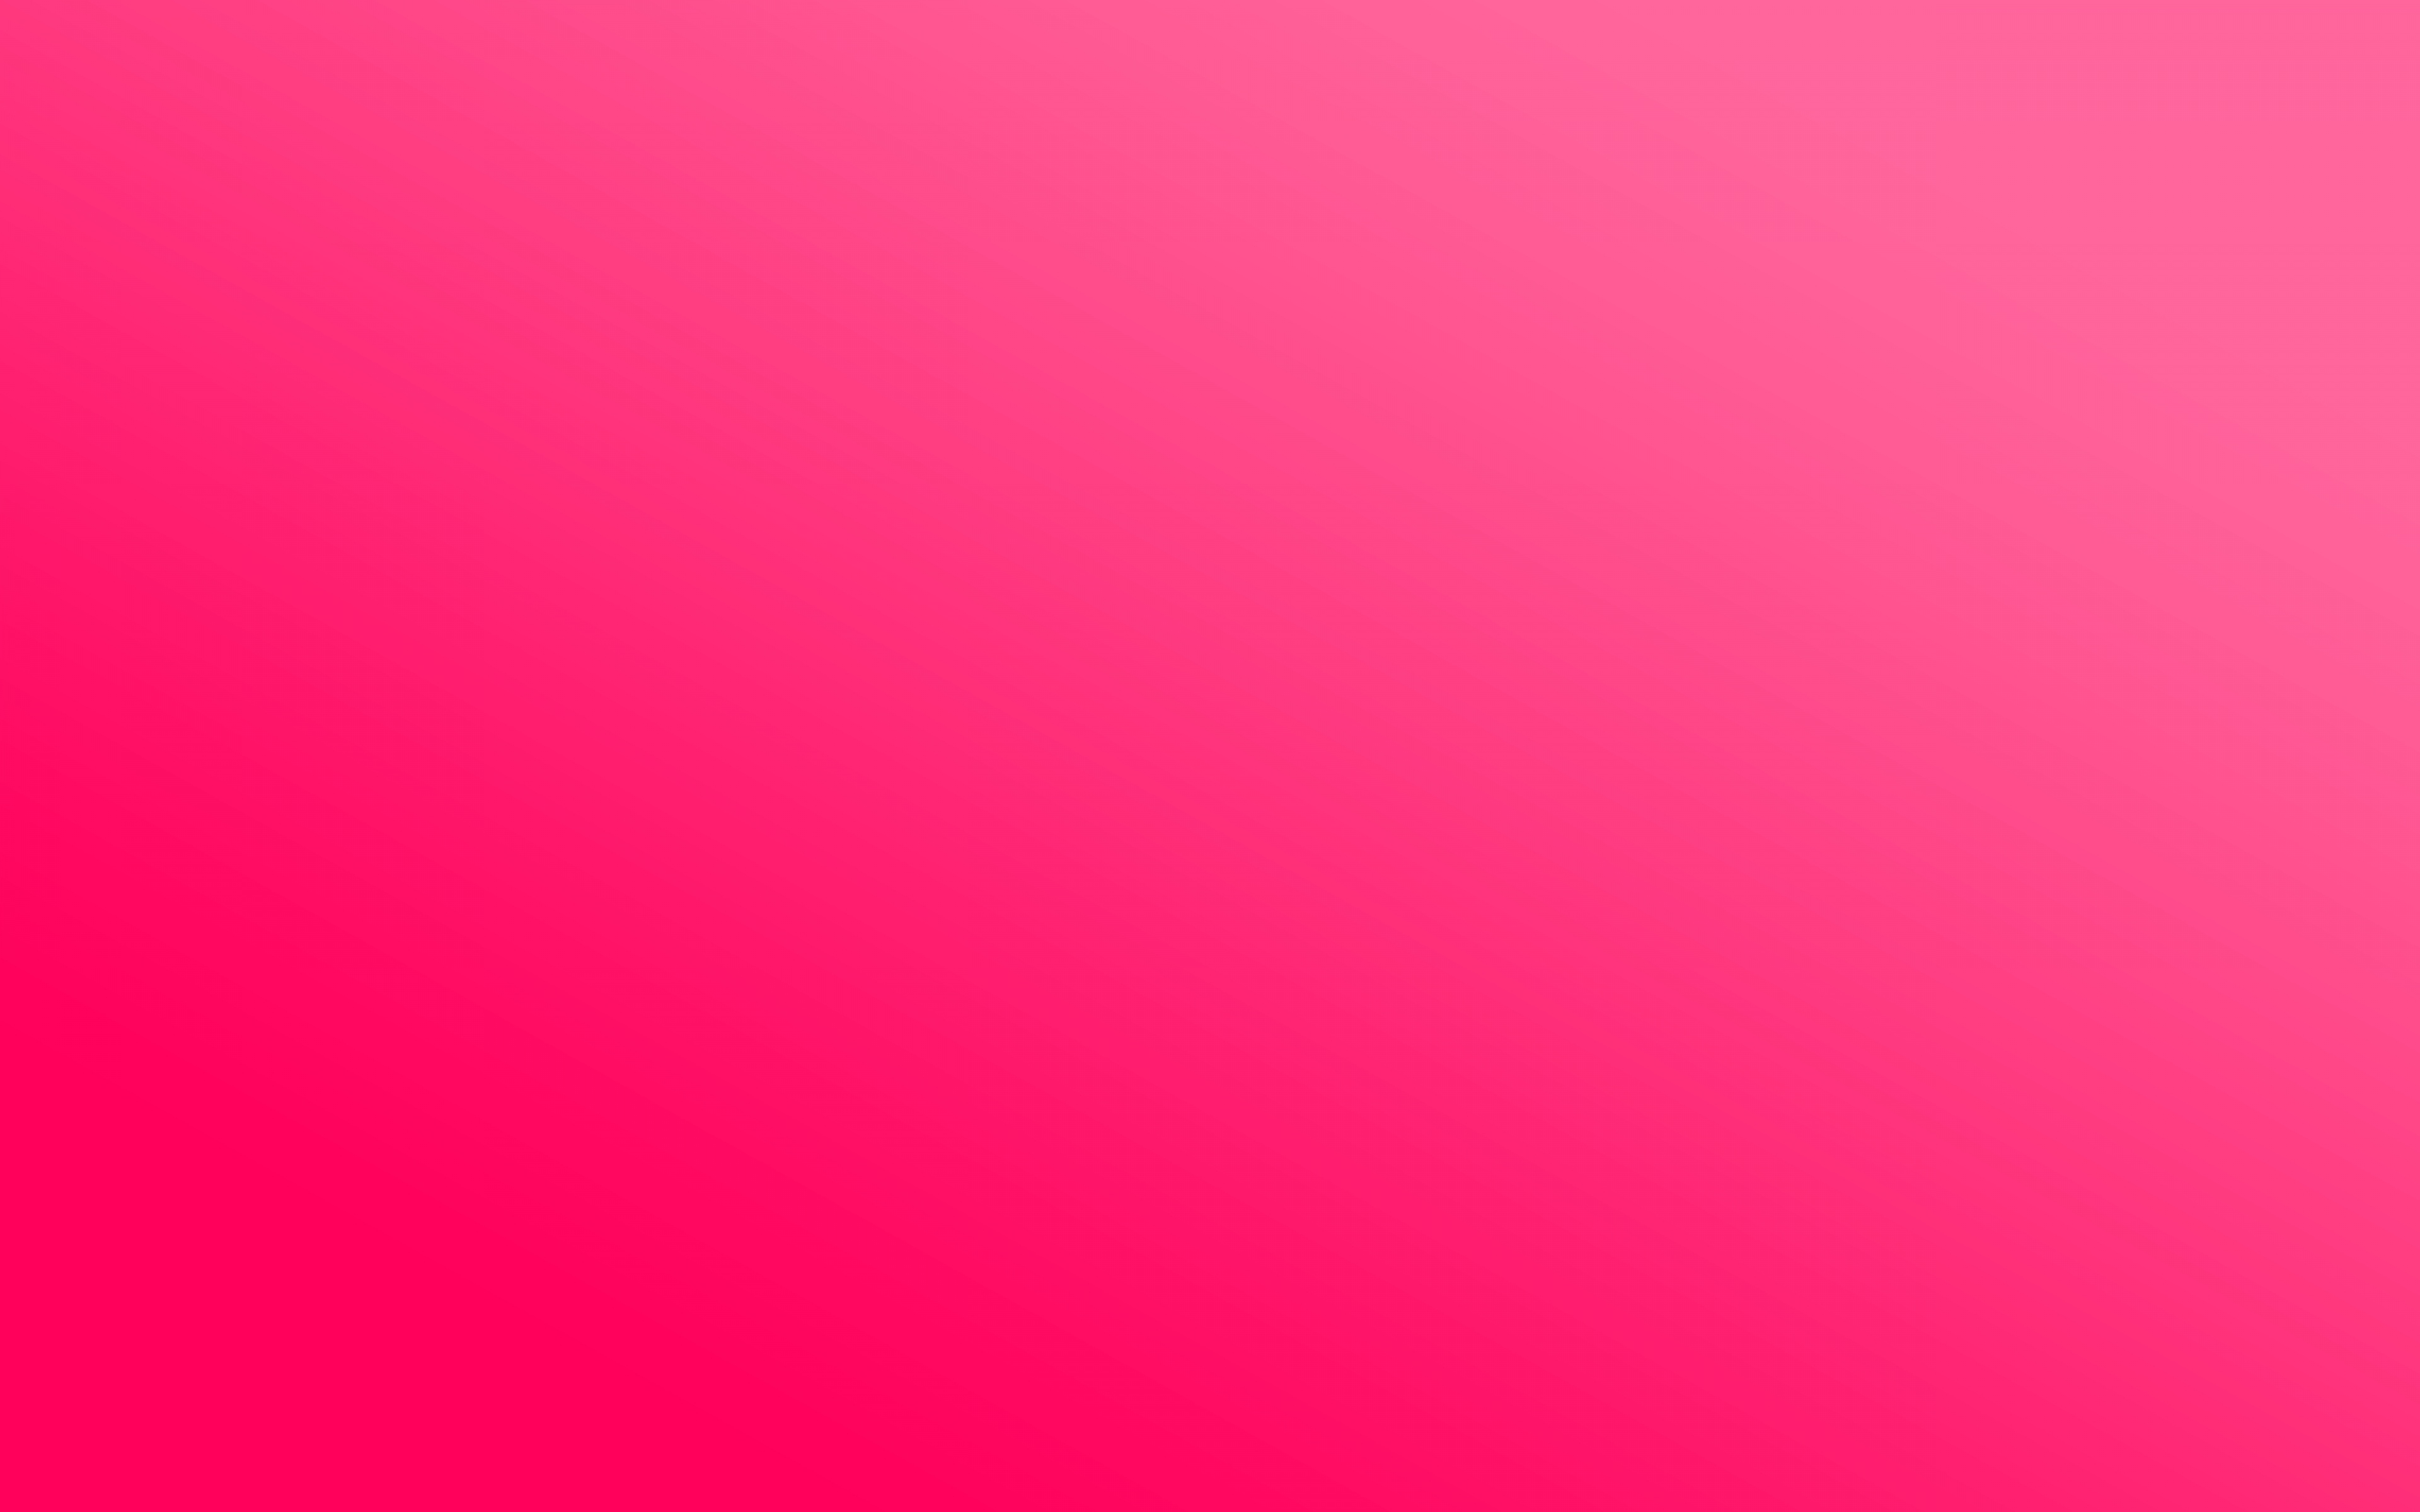 640x1136 Pink Solid Color Background  Pink plain wallpaper, Striped  wallpaper, Solid color backgrounds